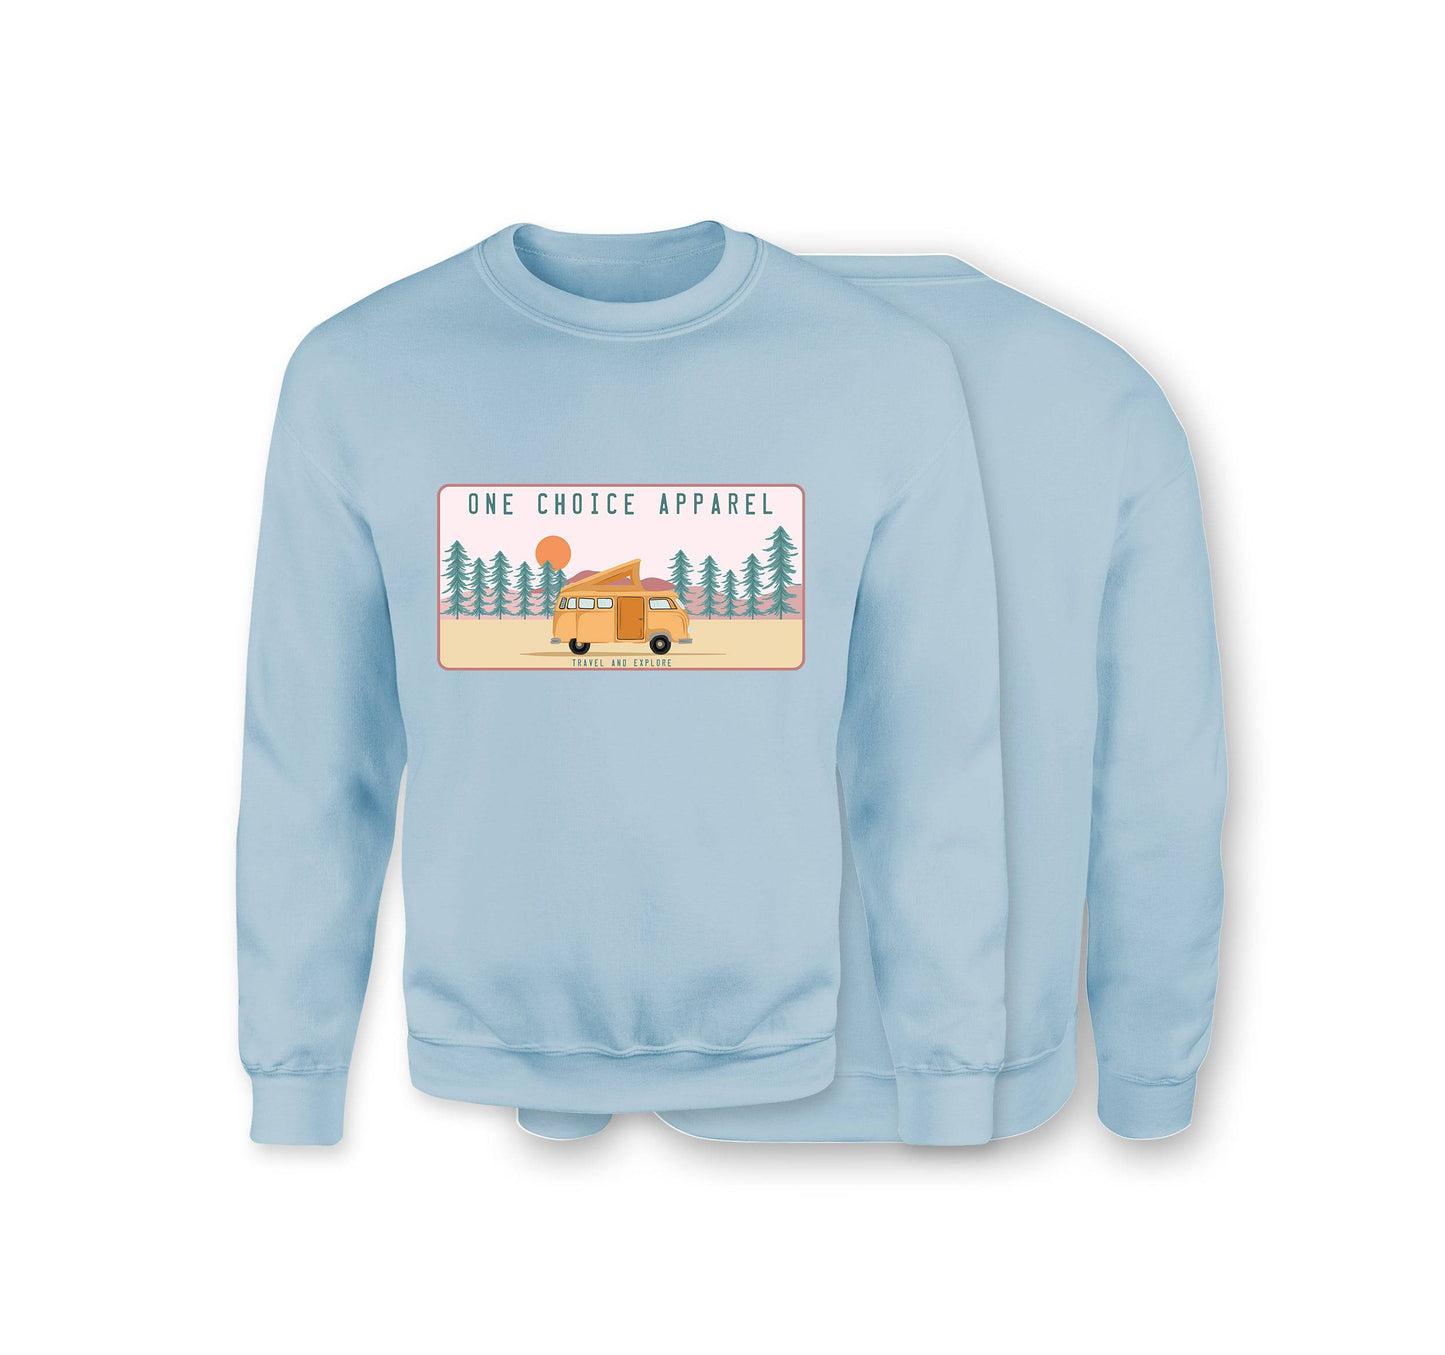 Campervan Scene Sweatshirt - Organic Cotton Sweatshirt - Front Print - One Choice Apparel